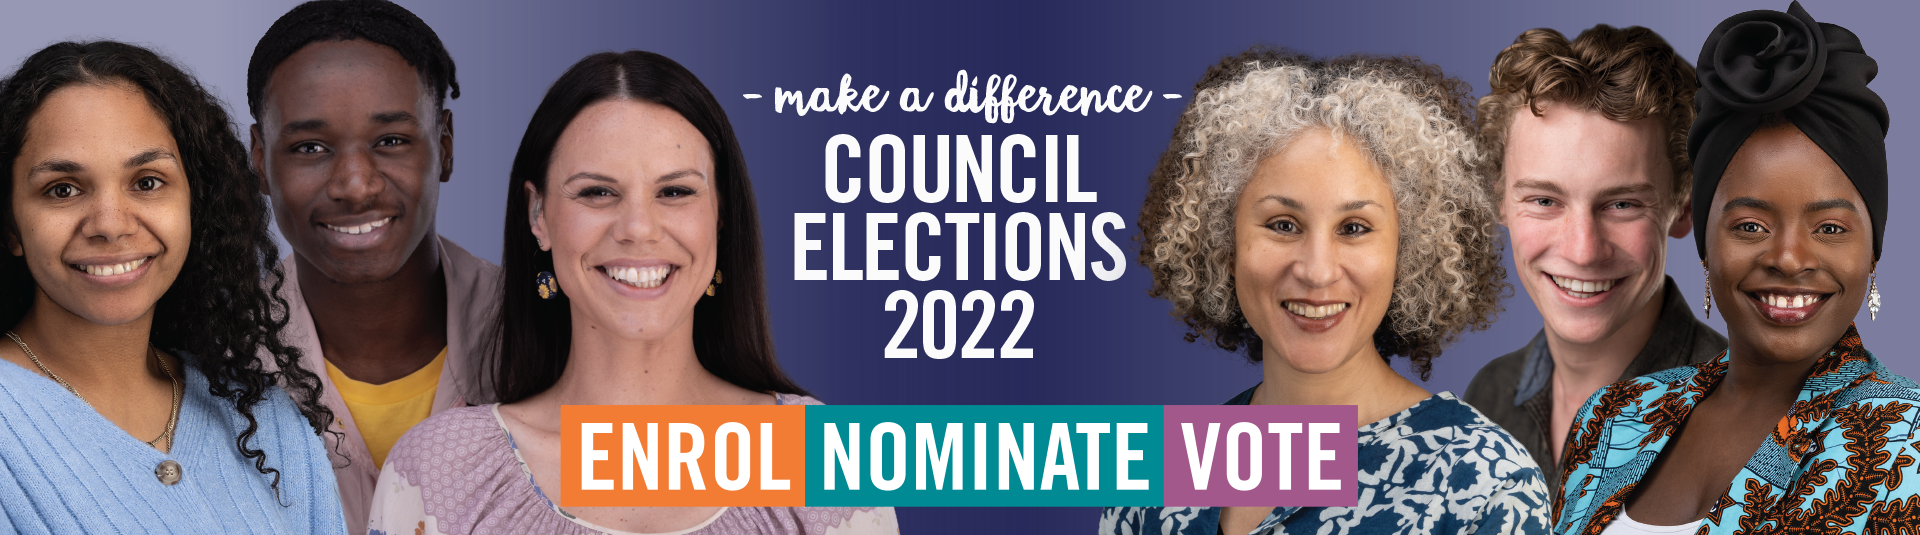 2022 Council Elections - Enrol, Nominate, Vote 